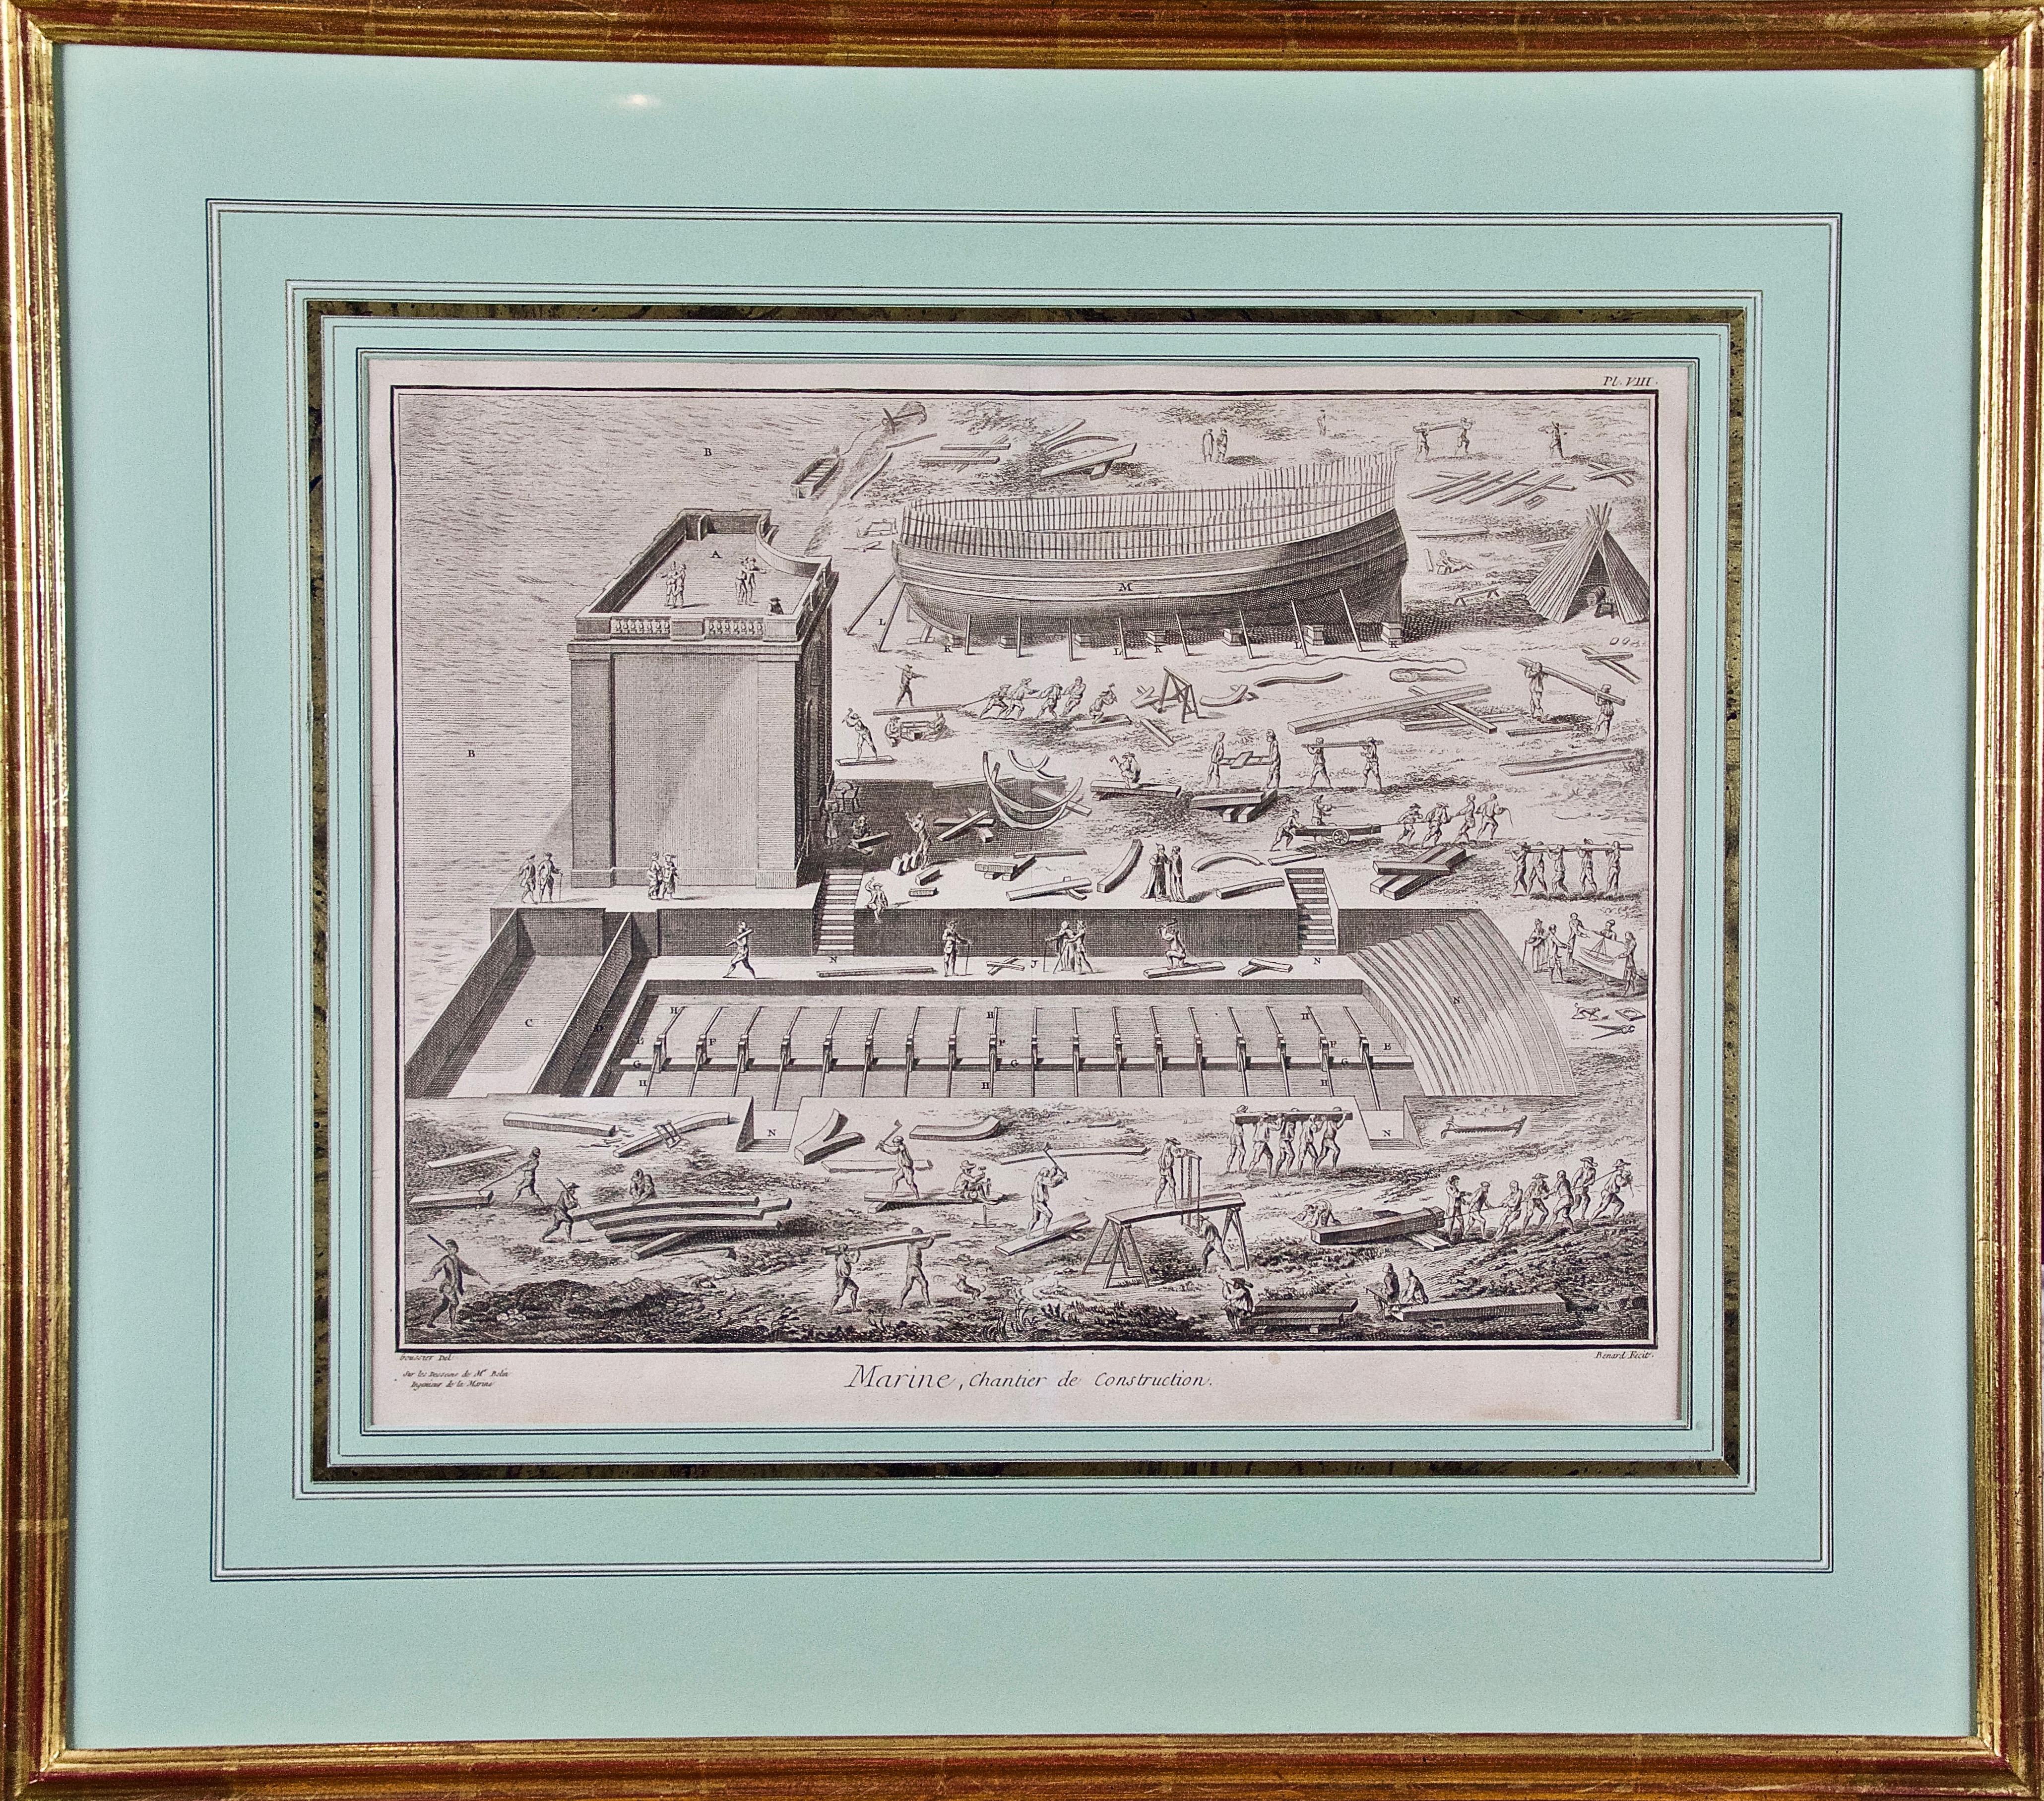 "Marine Chantier de Construction": 18th C. Engraving of Shipbuilding by Diderot